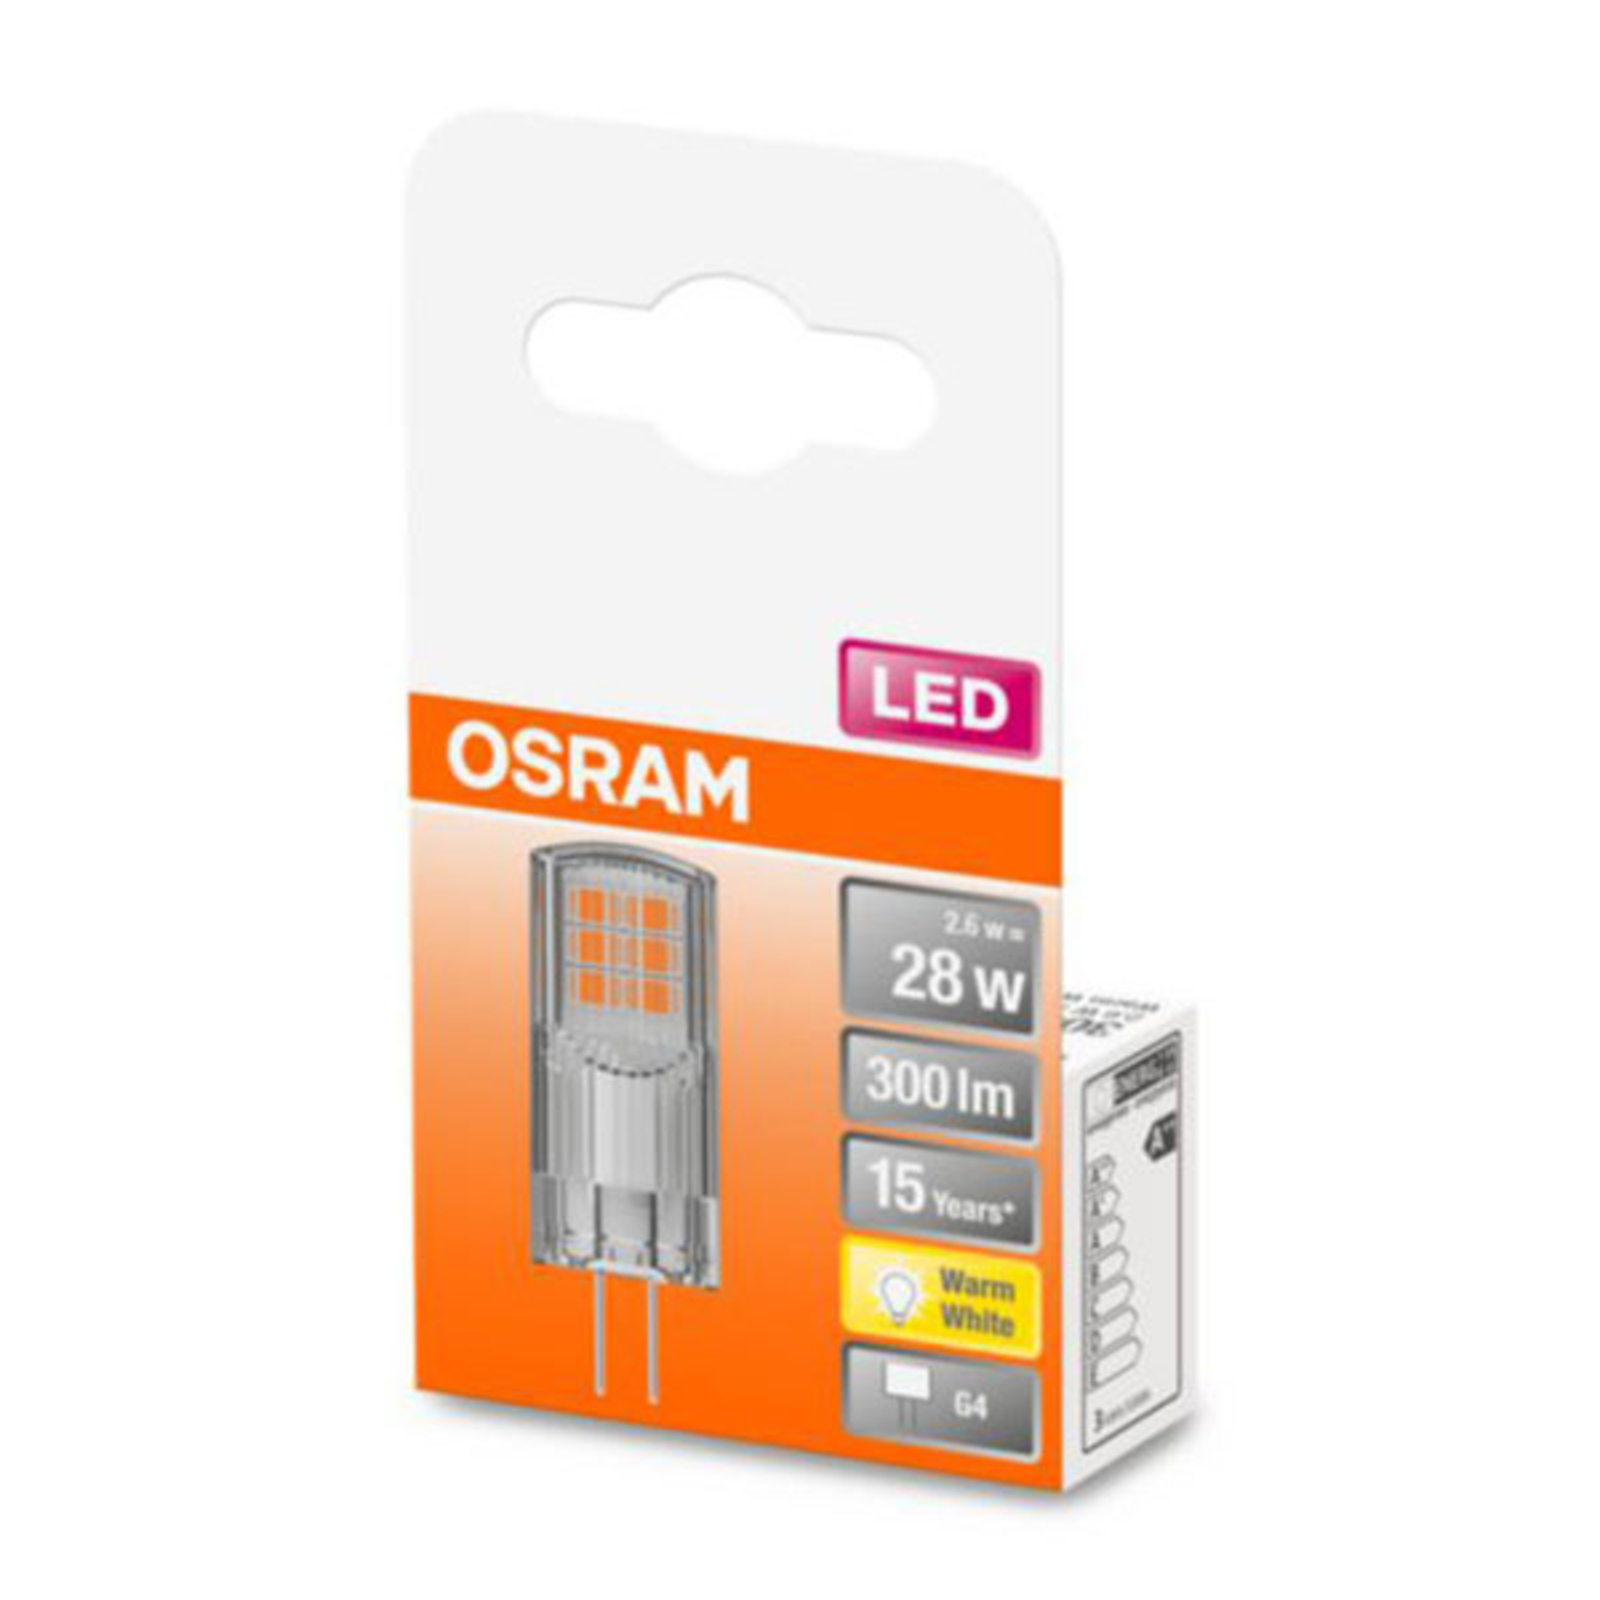 OSRAM LED bi-pin G4 2,6W, blanco cálido 300 lm